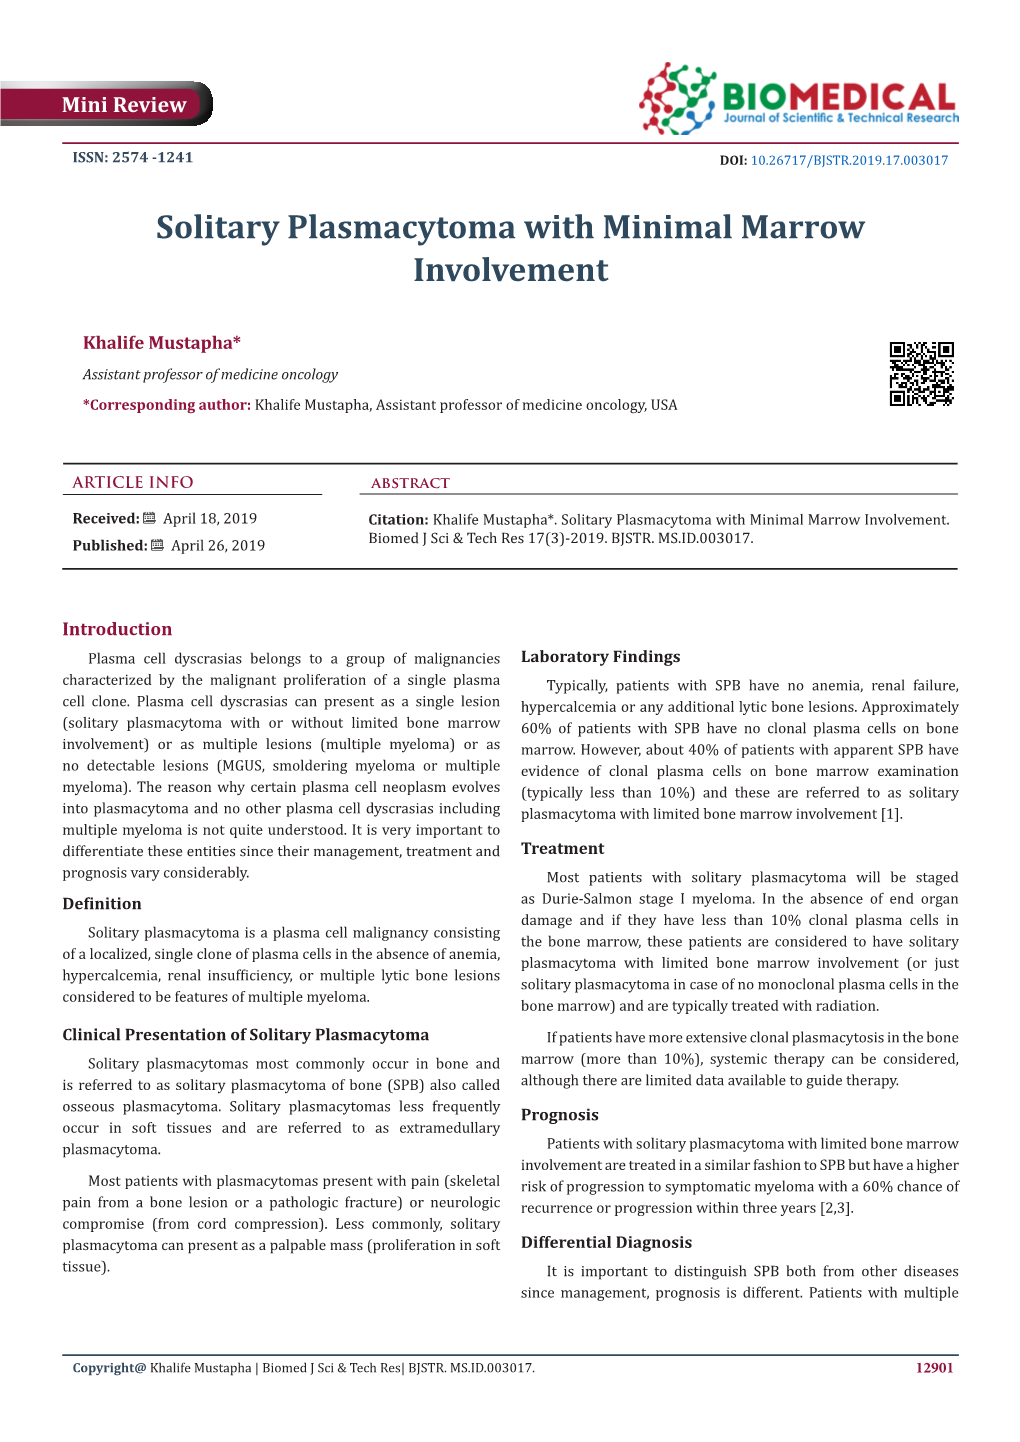 Solitary Plasmacytoma with Minimal Marrow Involvement